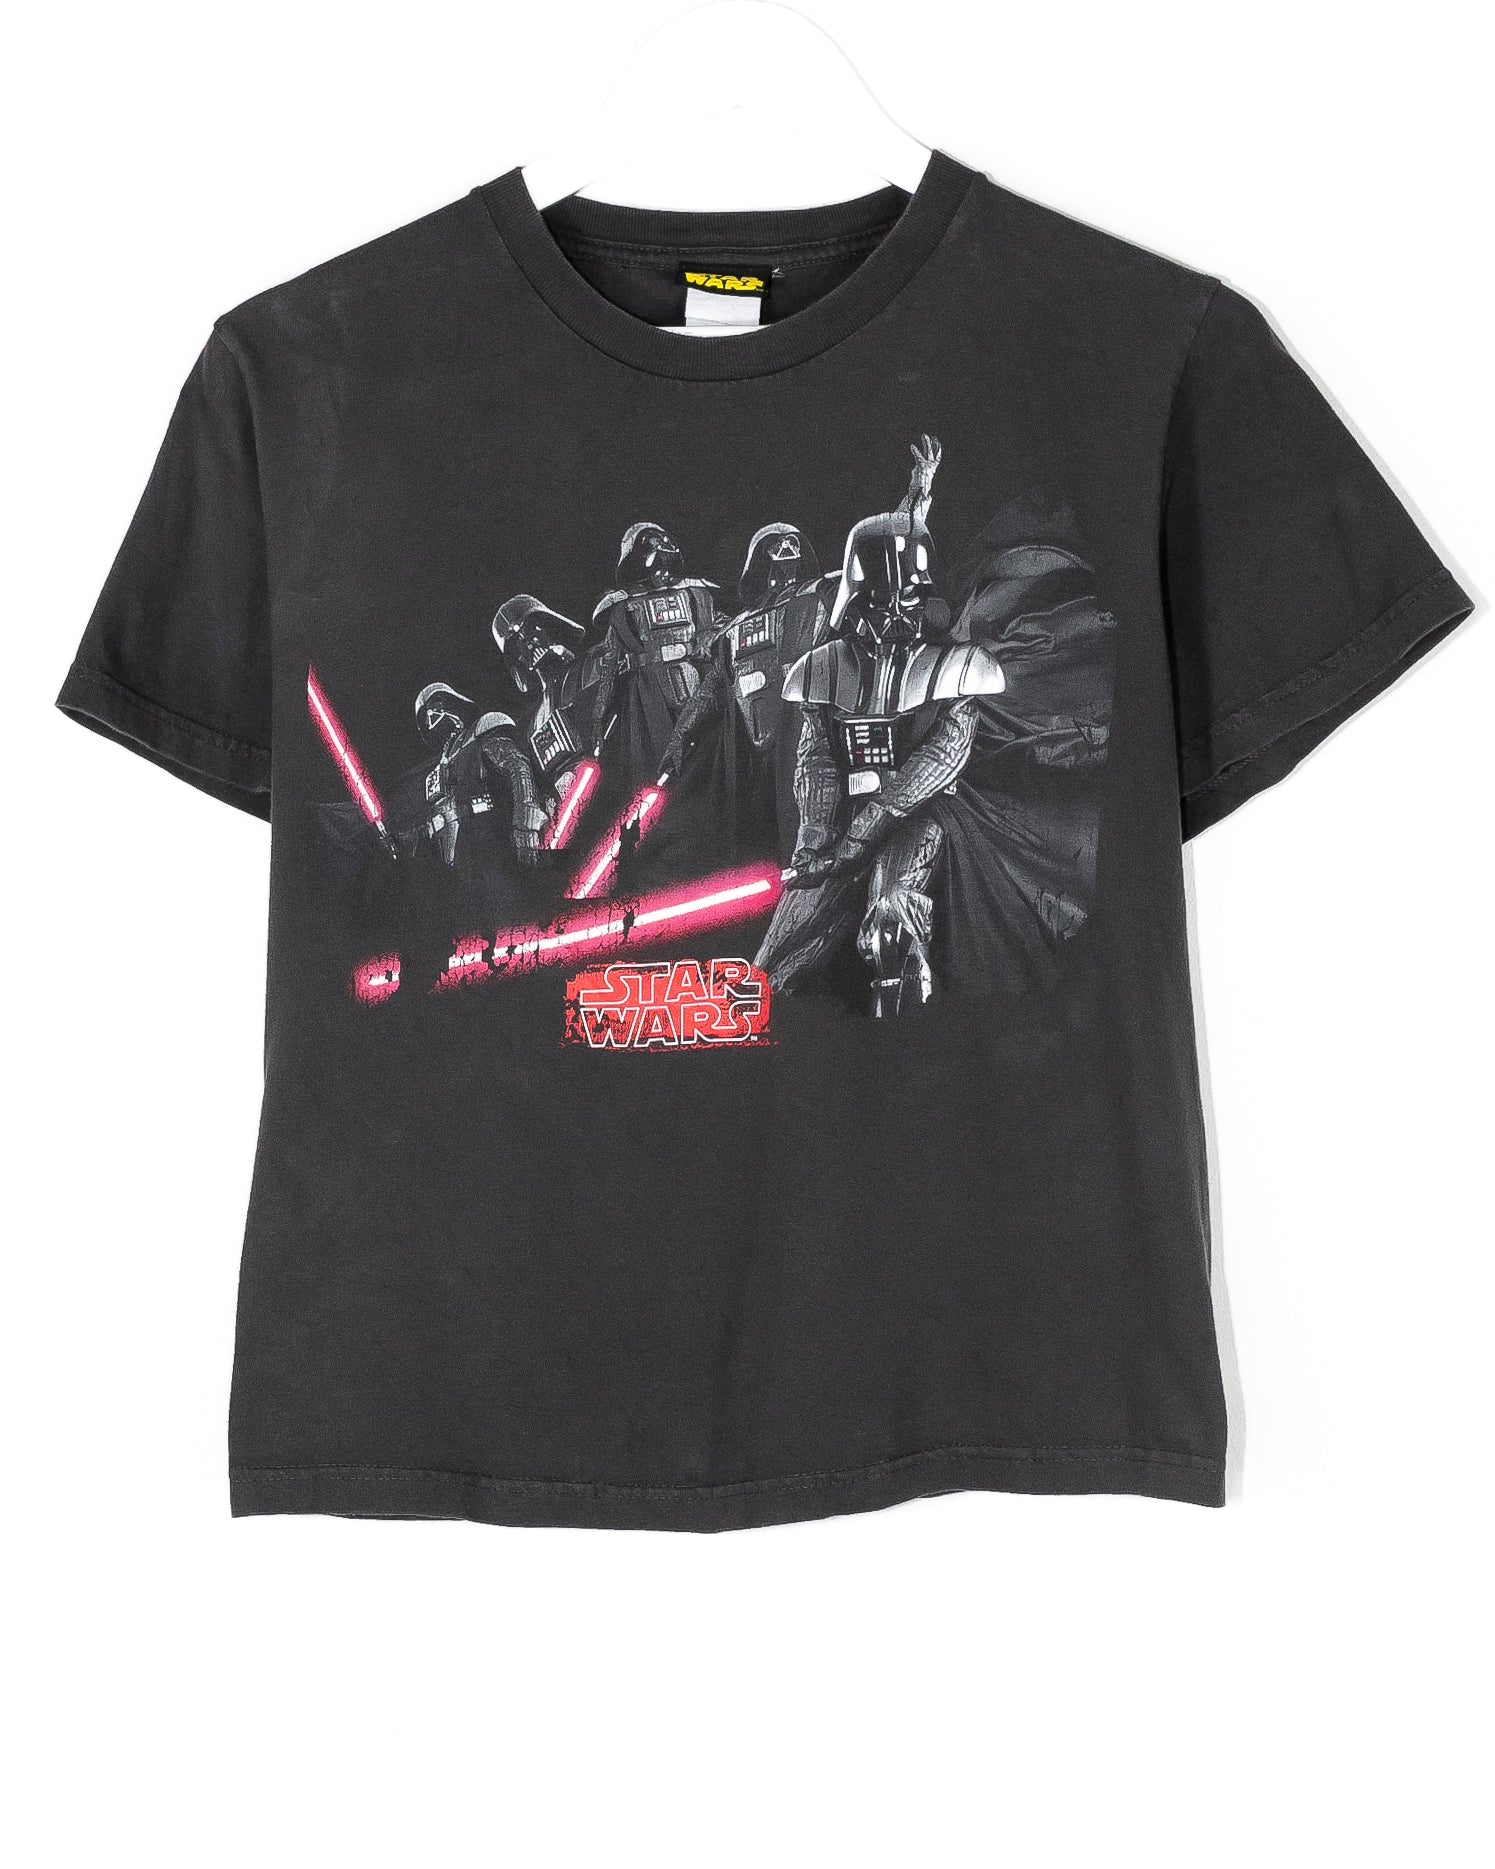 Vintage Star Wars T-Shirt (S/M)